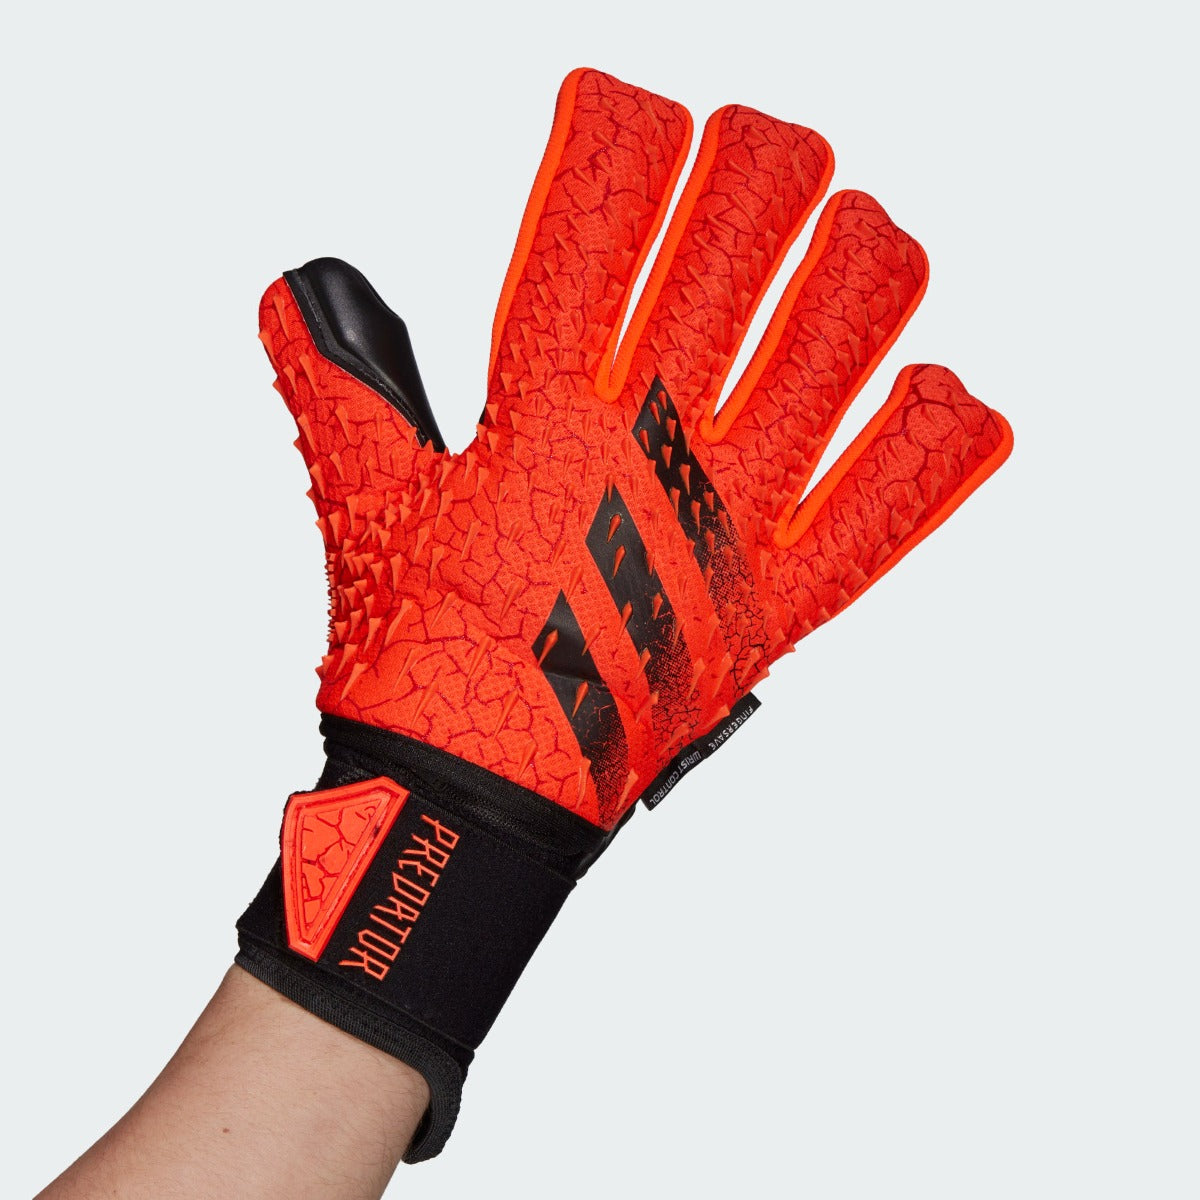 Adidas Predator Pro Ultimate Goalkeeper Gloves - Solar Red-Black (Single - Outer)